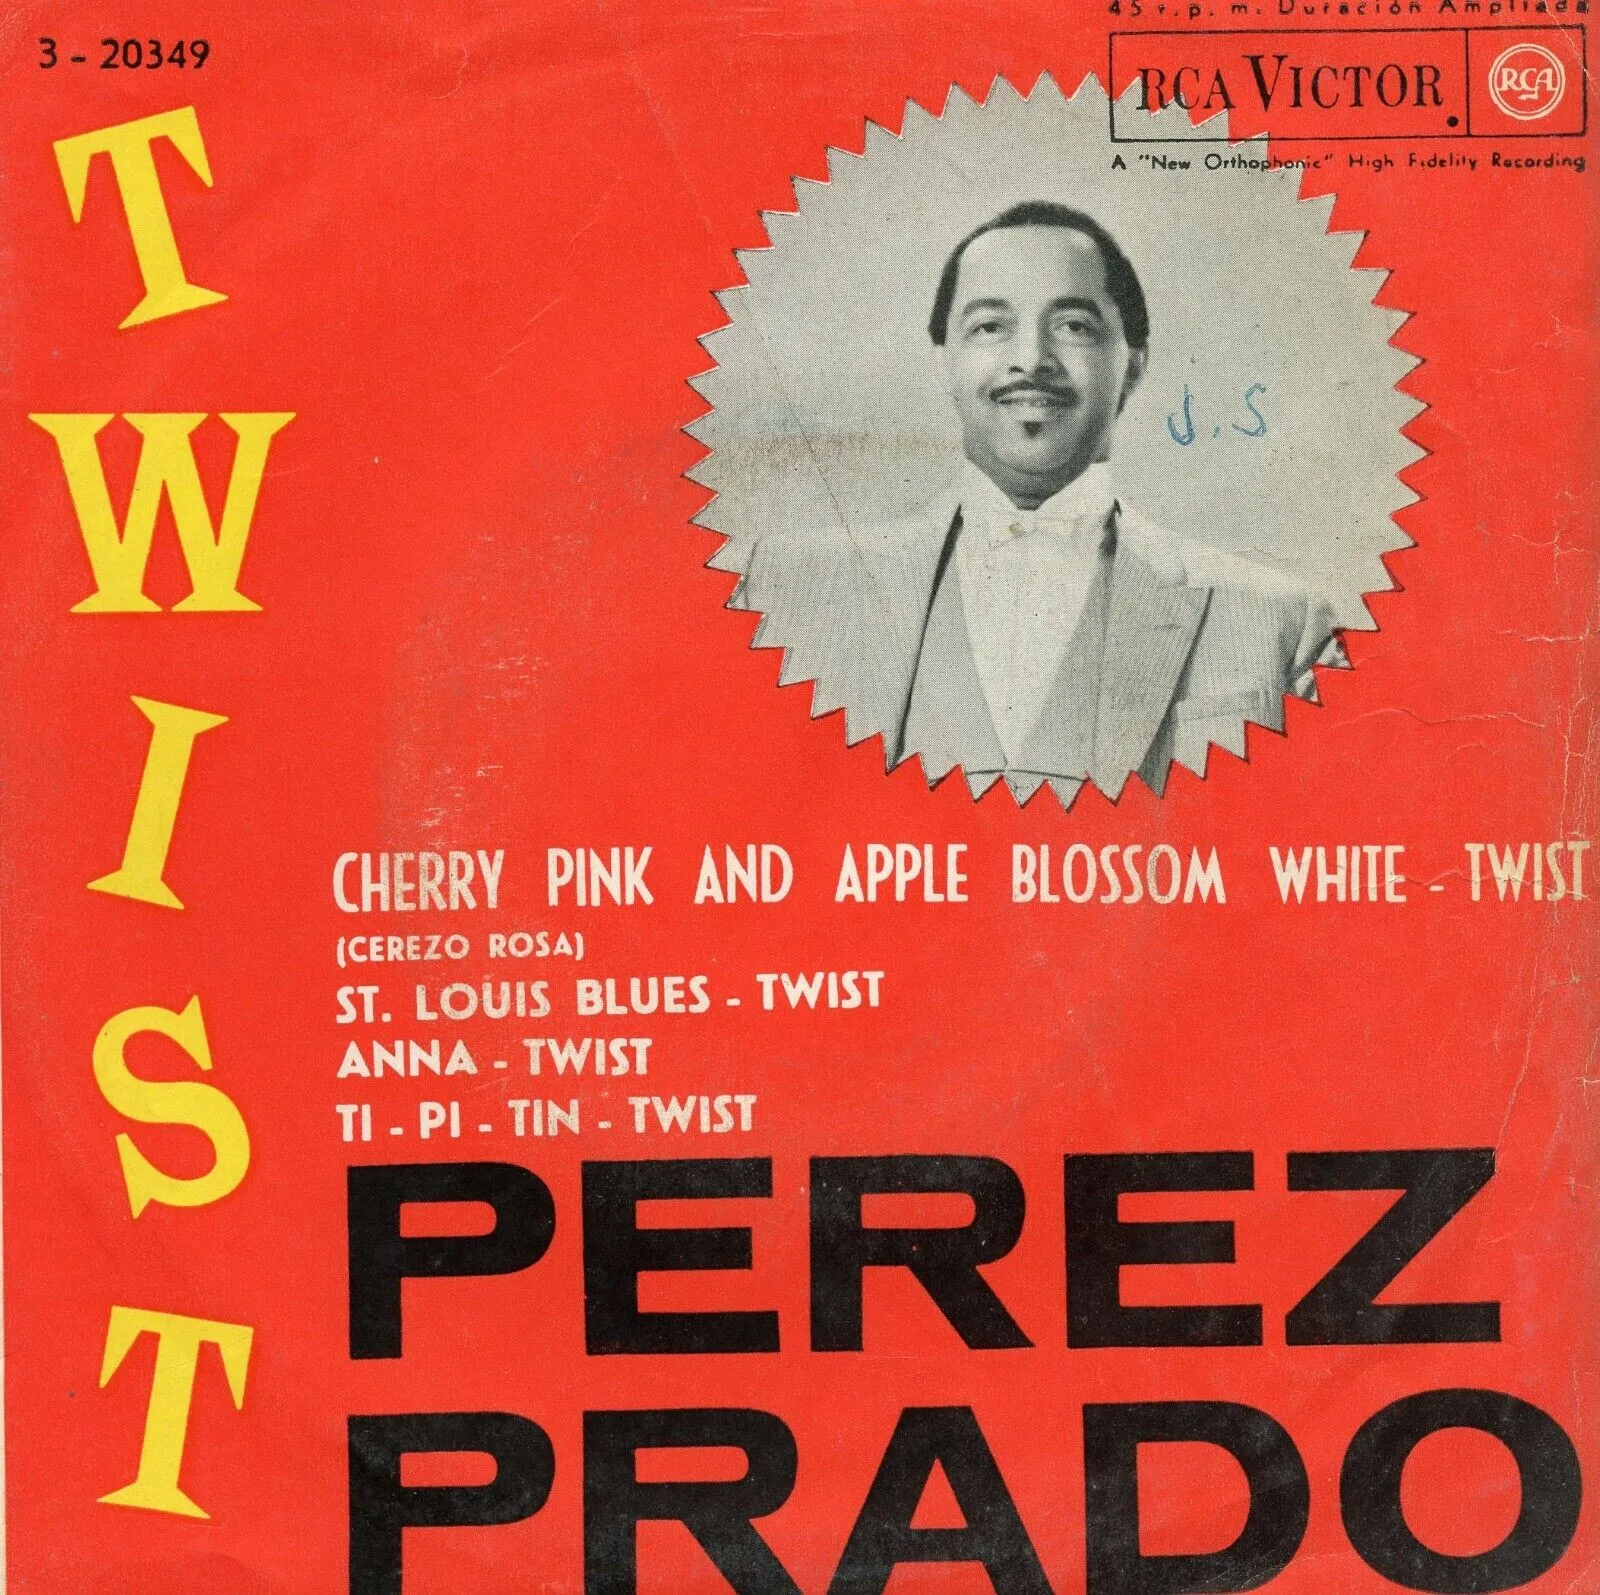 The album cover for Twist, by Perez Prado.